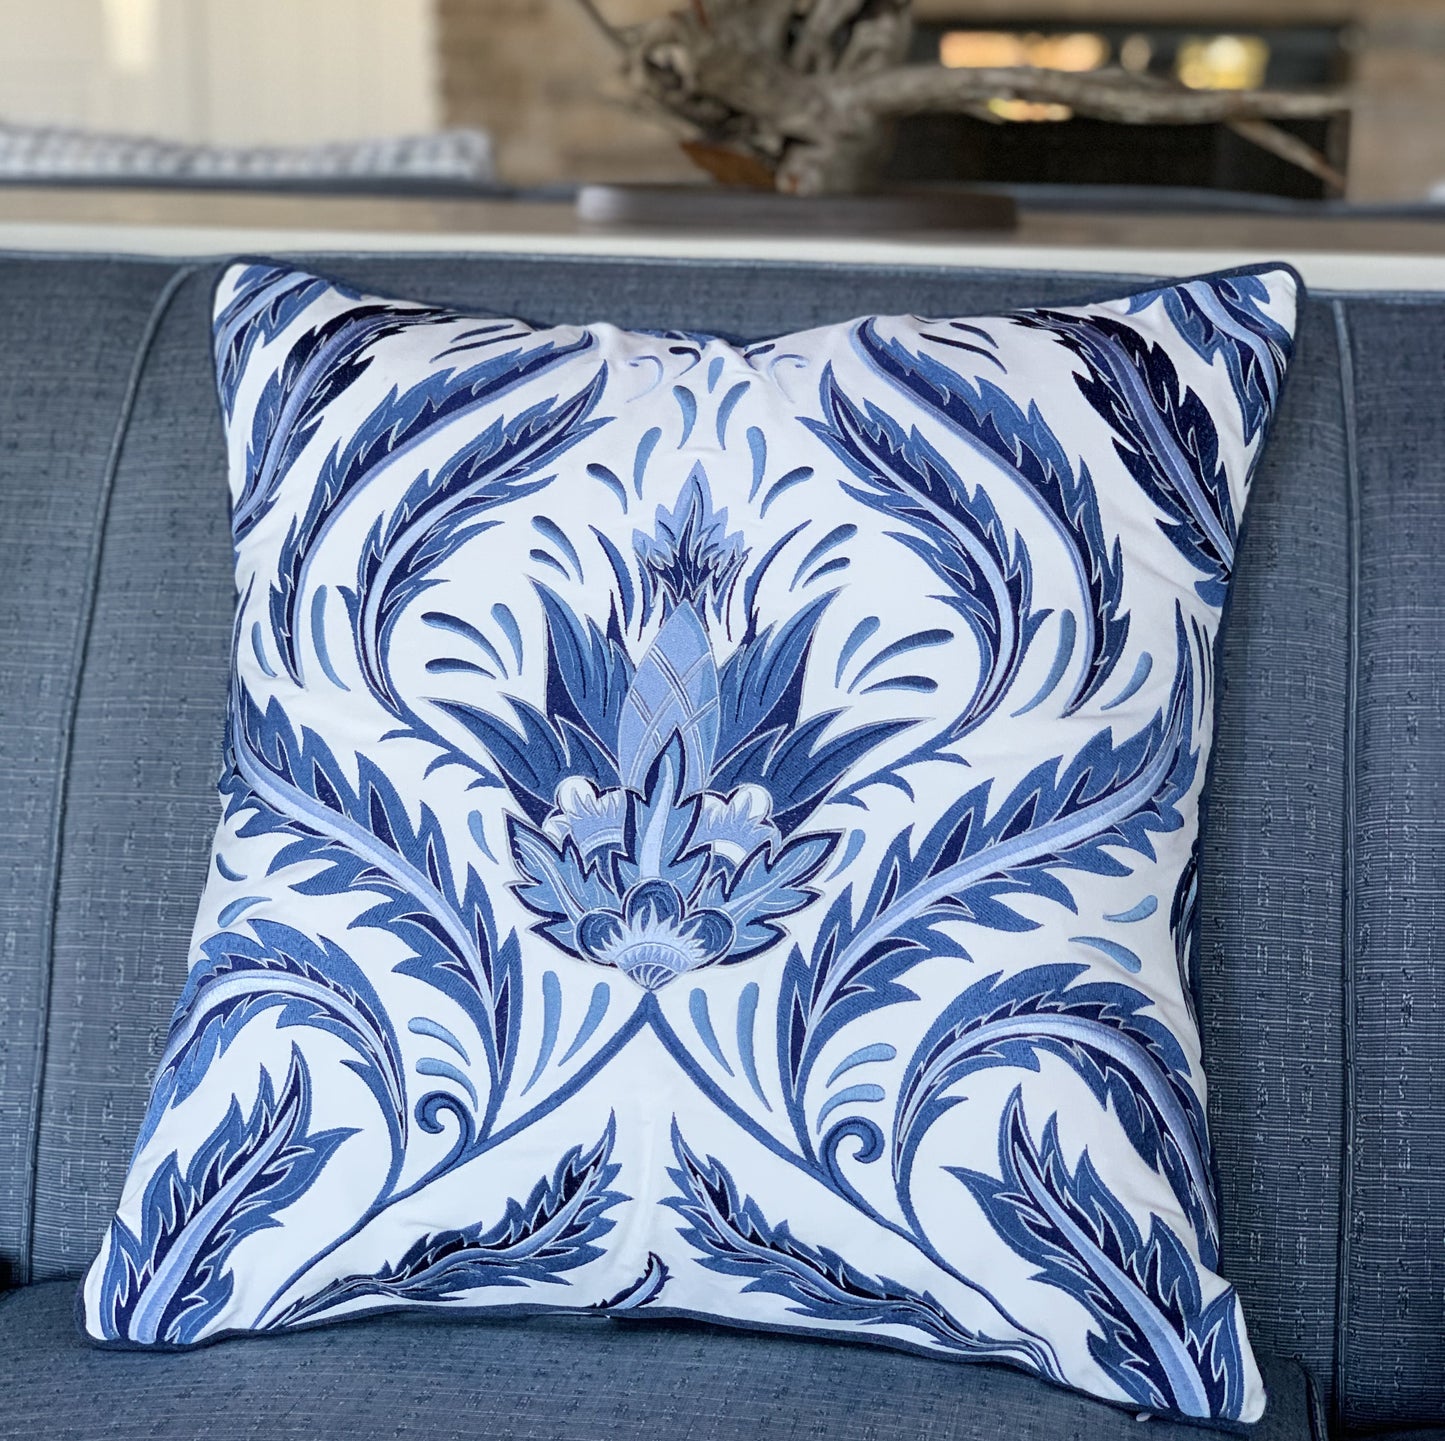 Indigo Morris Thistle indoor styled on a blue sofa.